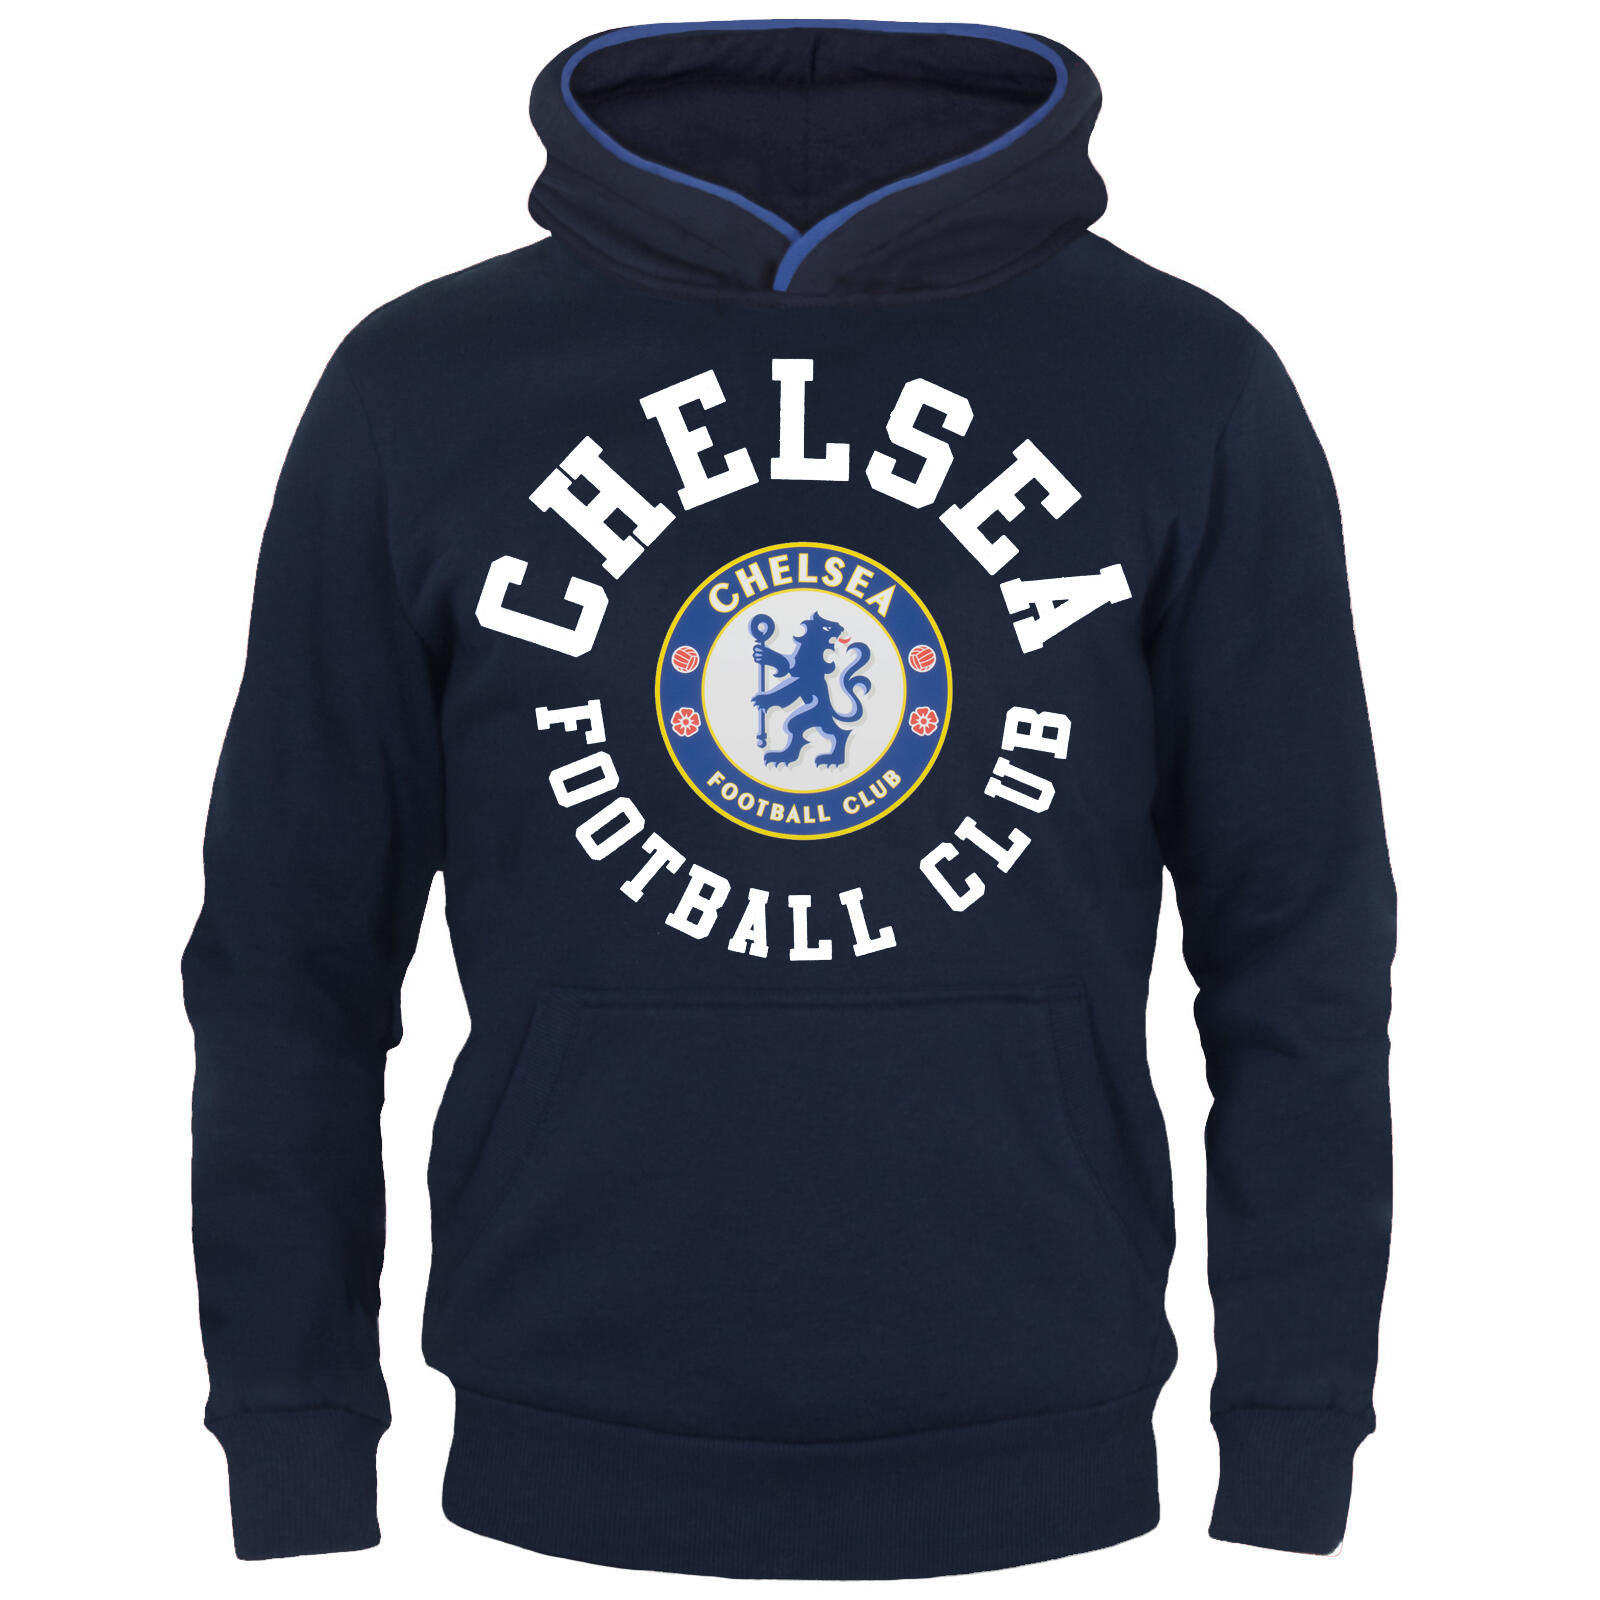 CHELSEA Chelsea FC Boys Hoody Fleece Graphic Kids OFFICIAL Football Gift